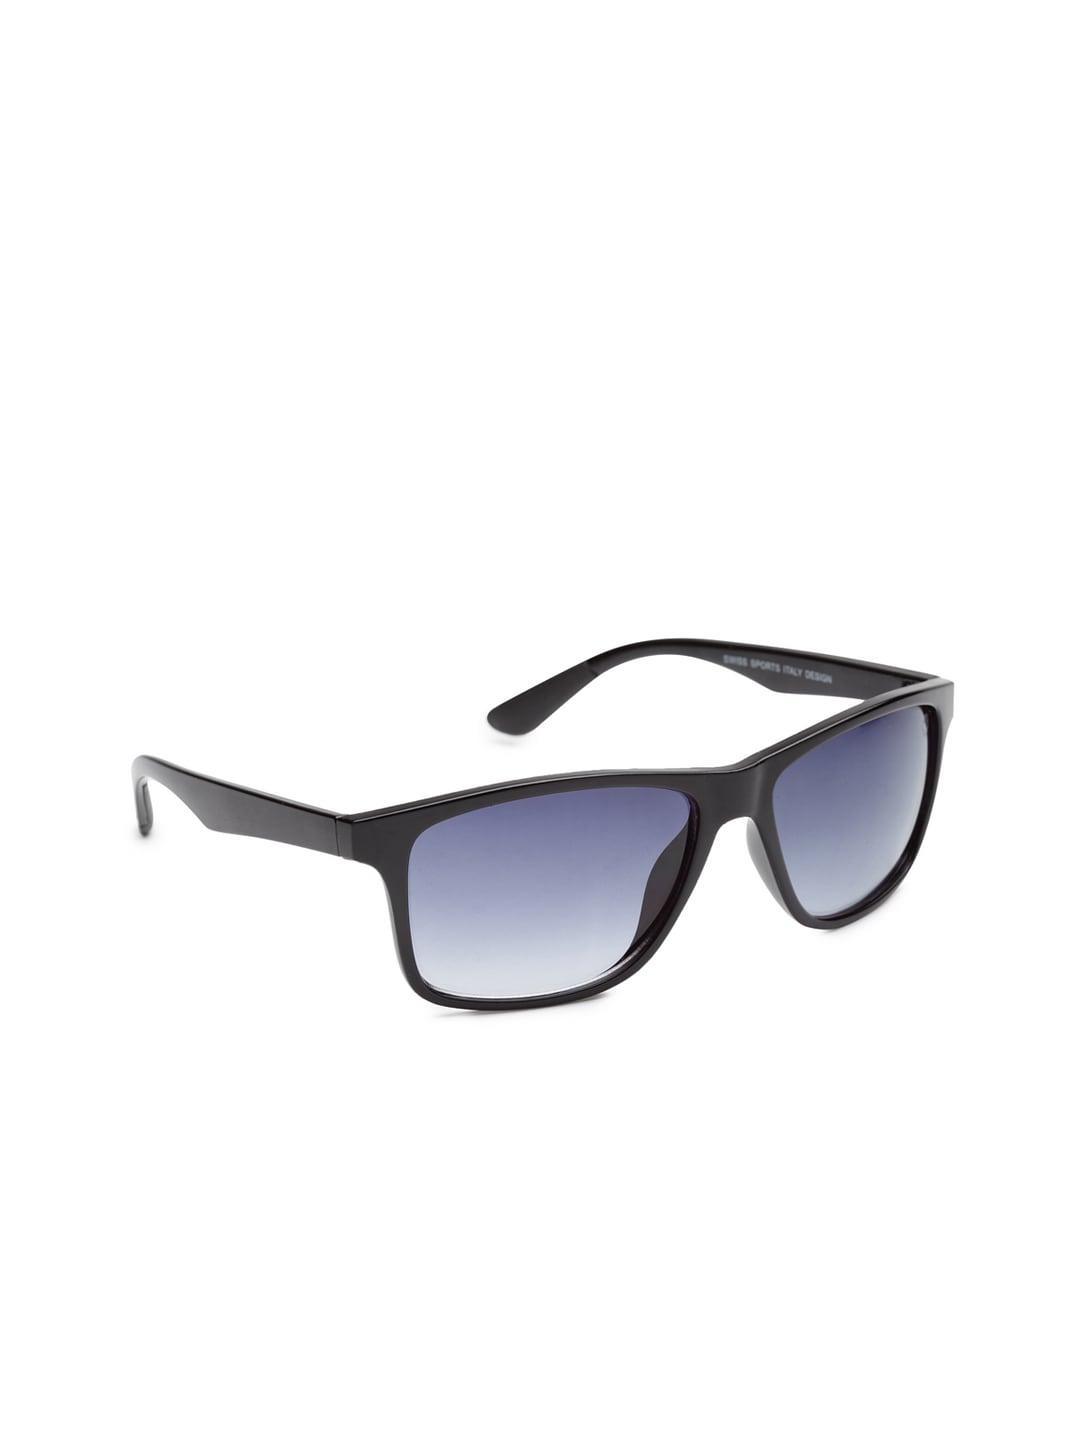 Get Glamr Unisex Wayfarer Sunglasses SG-UN-MT-208-9